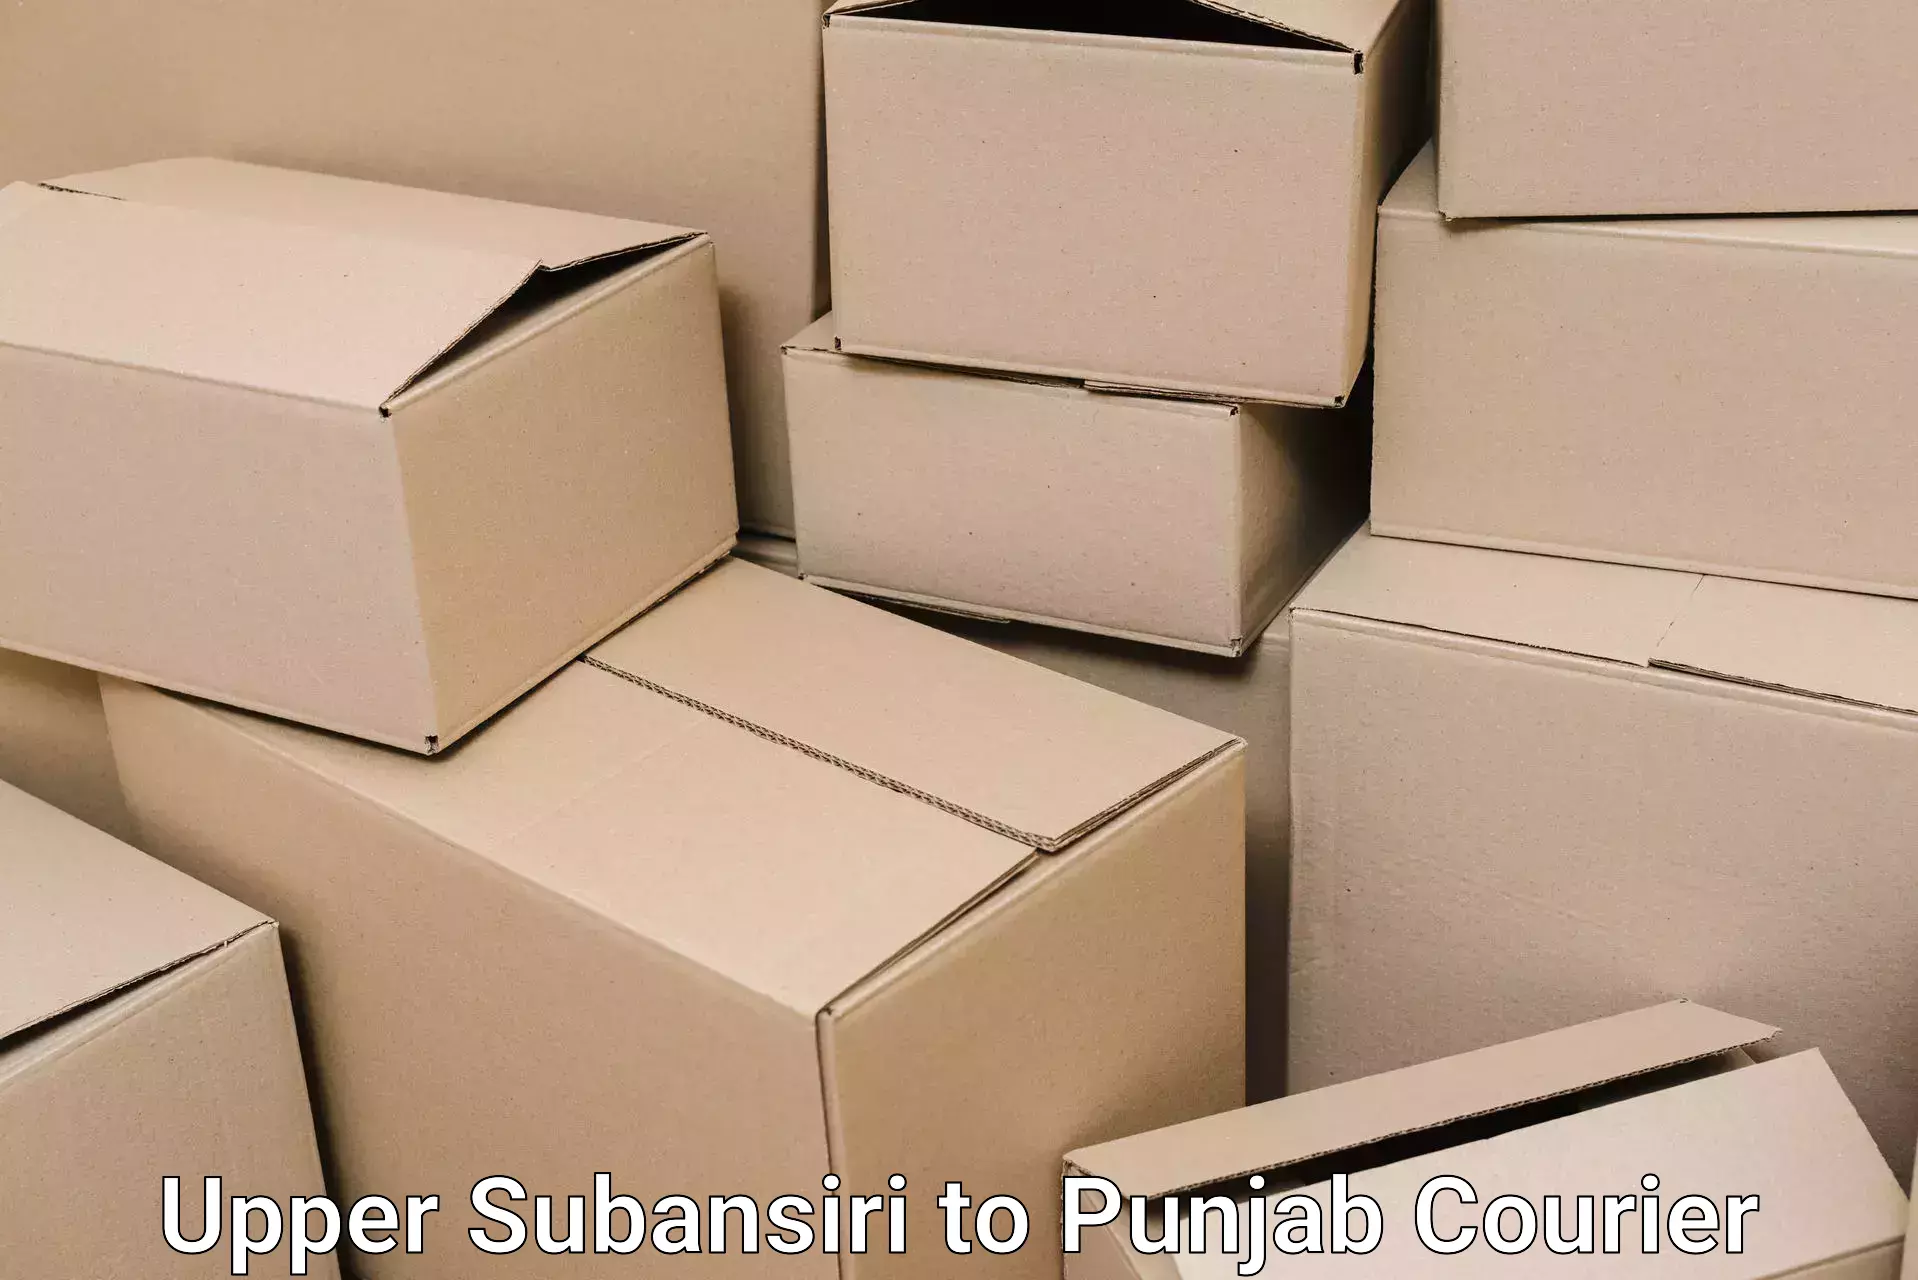 Household moving experts Upper Subansiri to Punjab